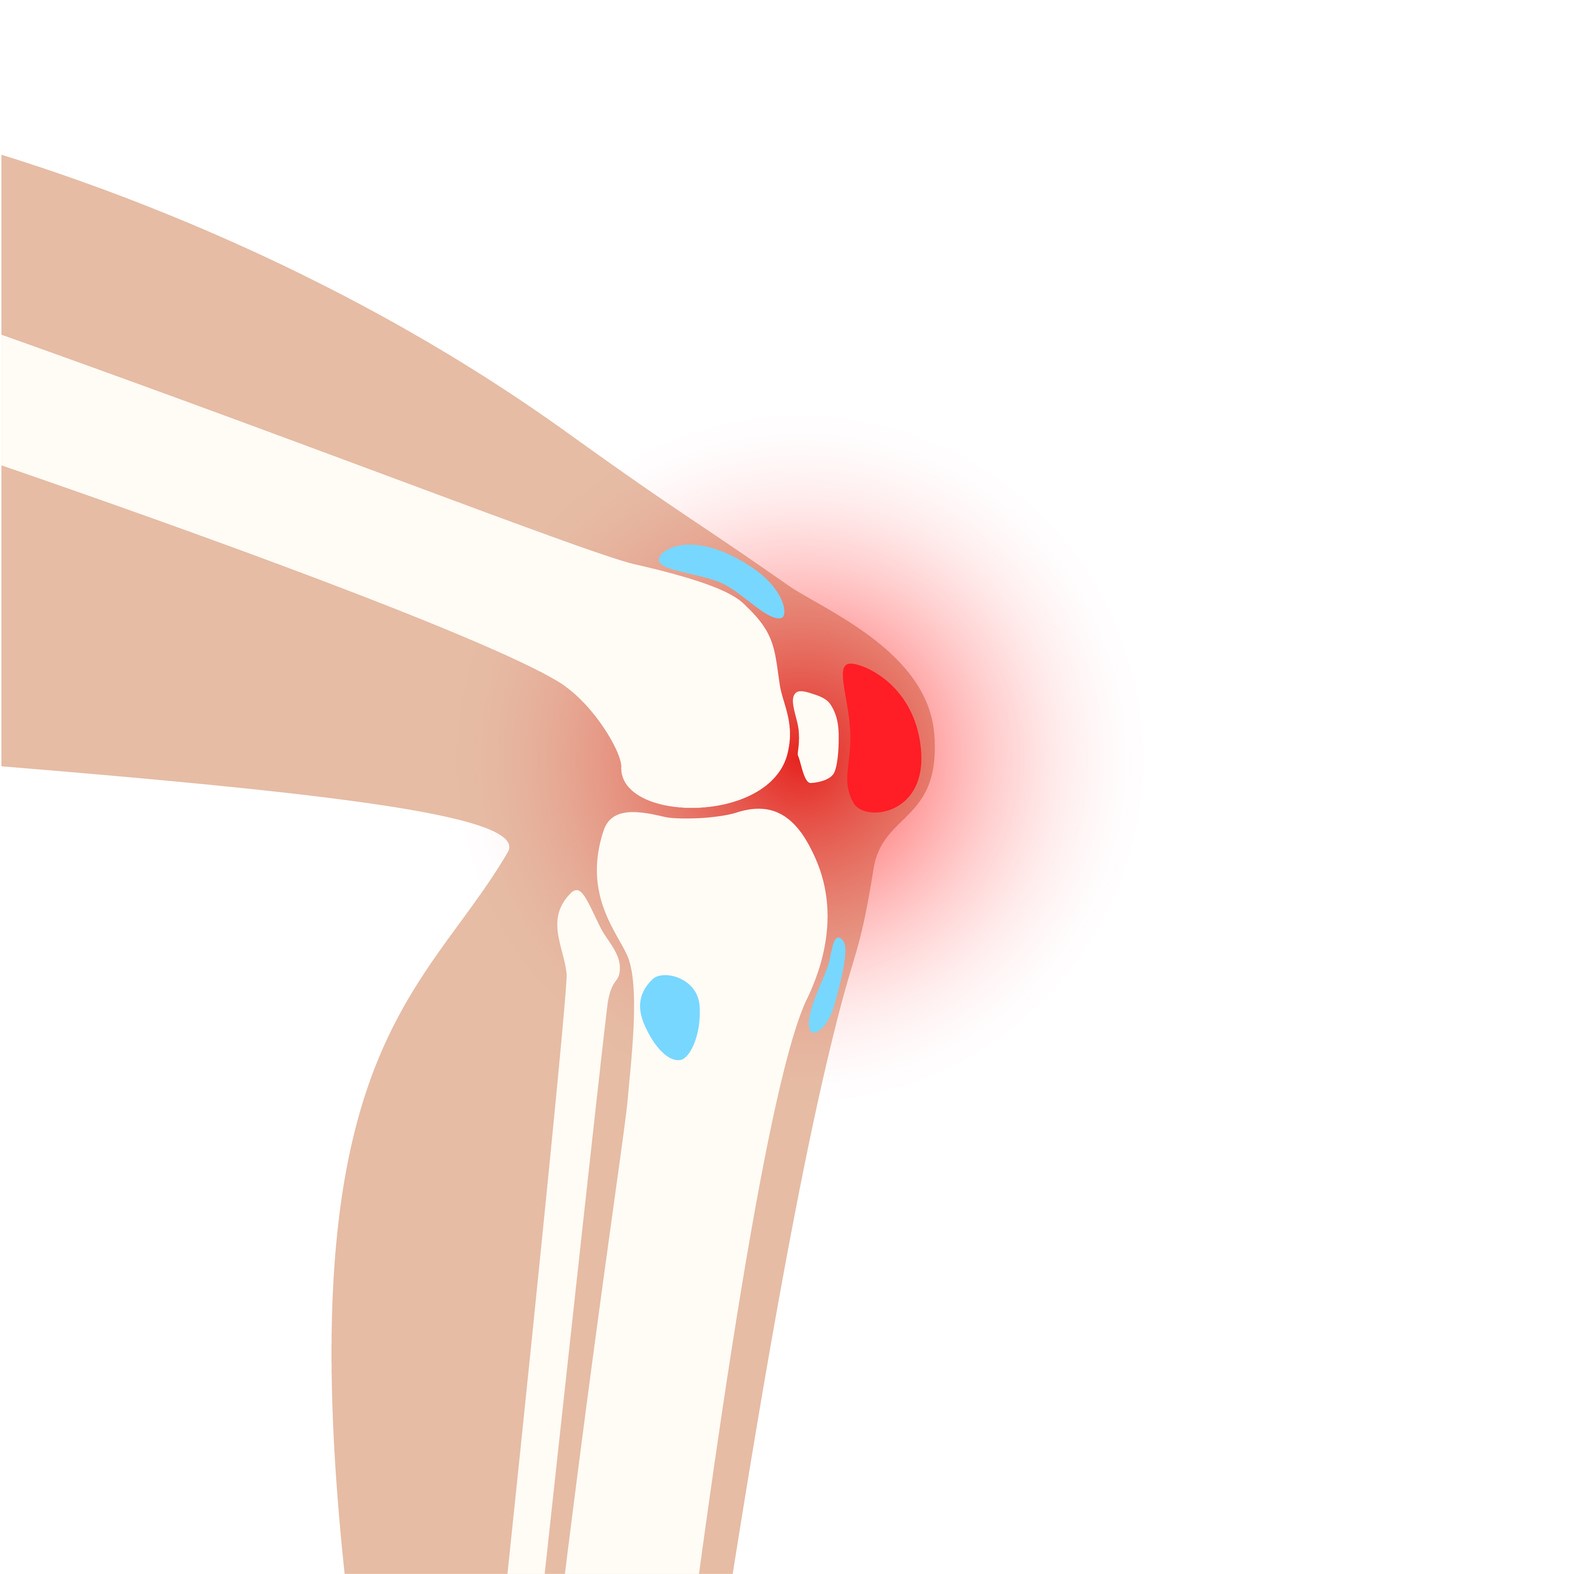 Kneecap bursitis